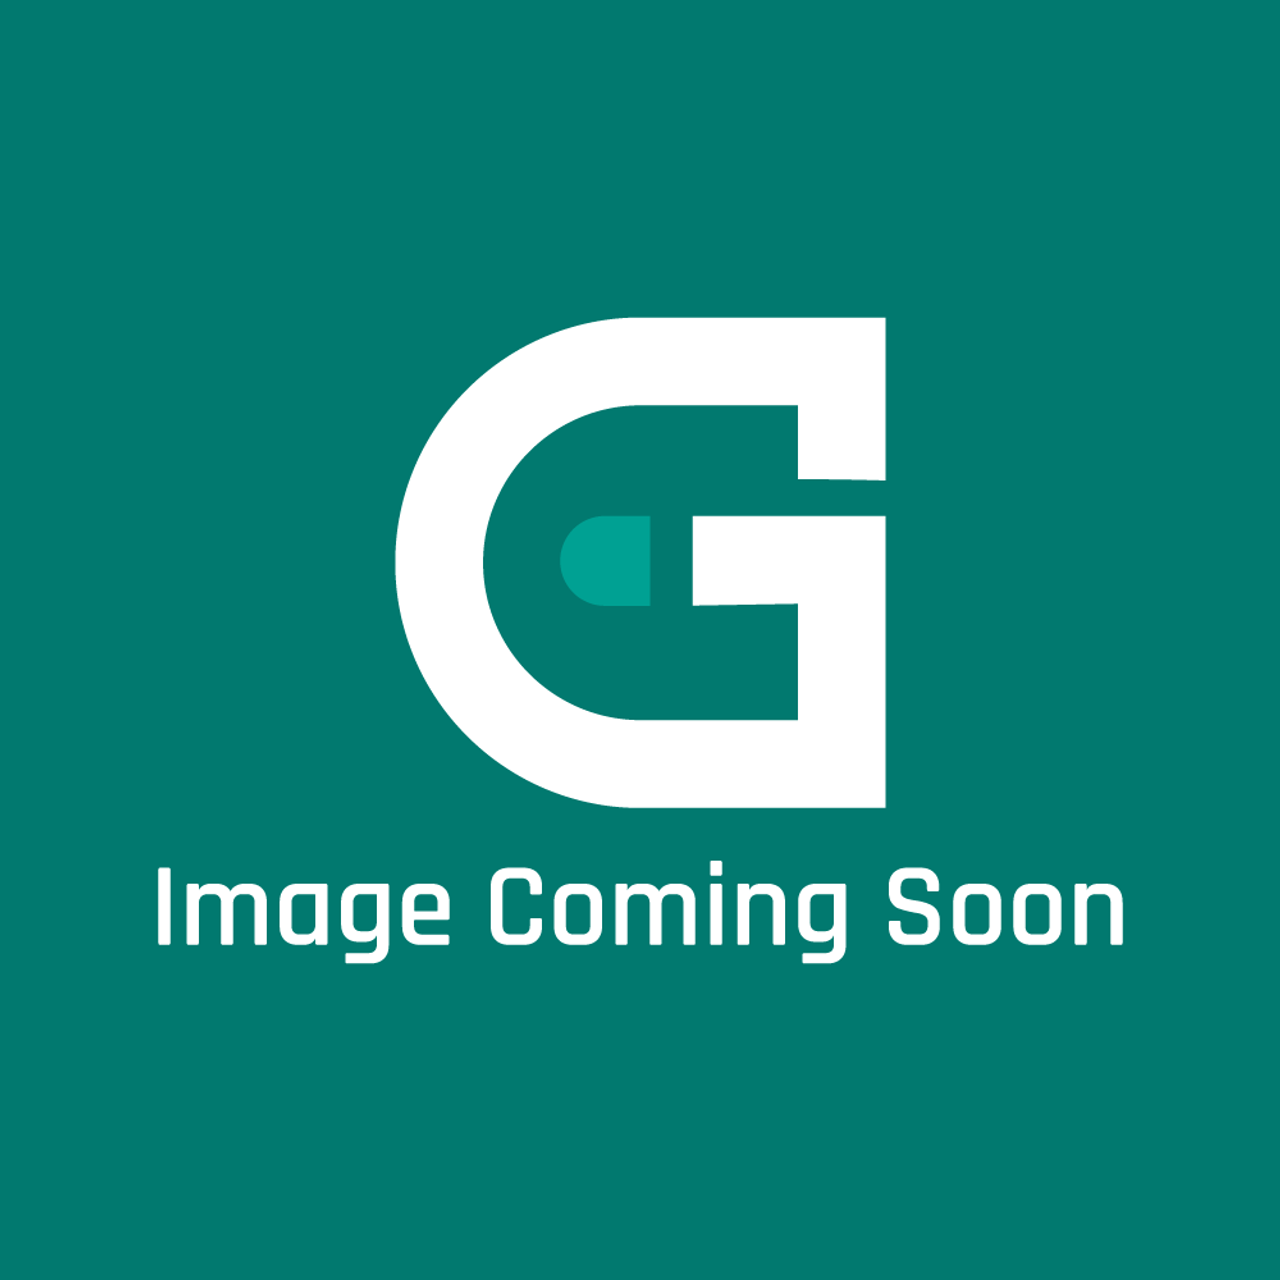 AGA Marvel R3631 - Sight Glass G16-035M 480K - Image Coming Soon!